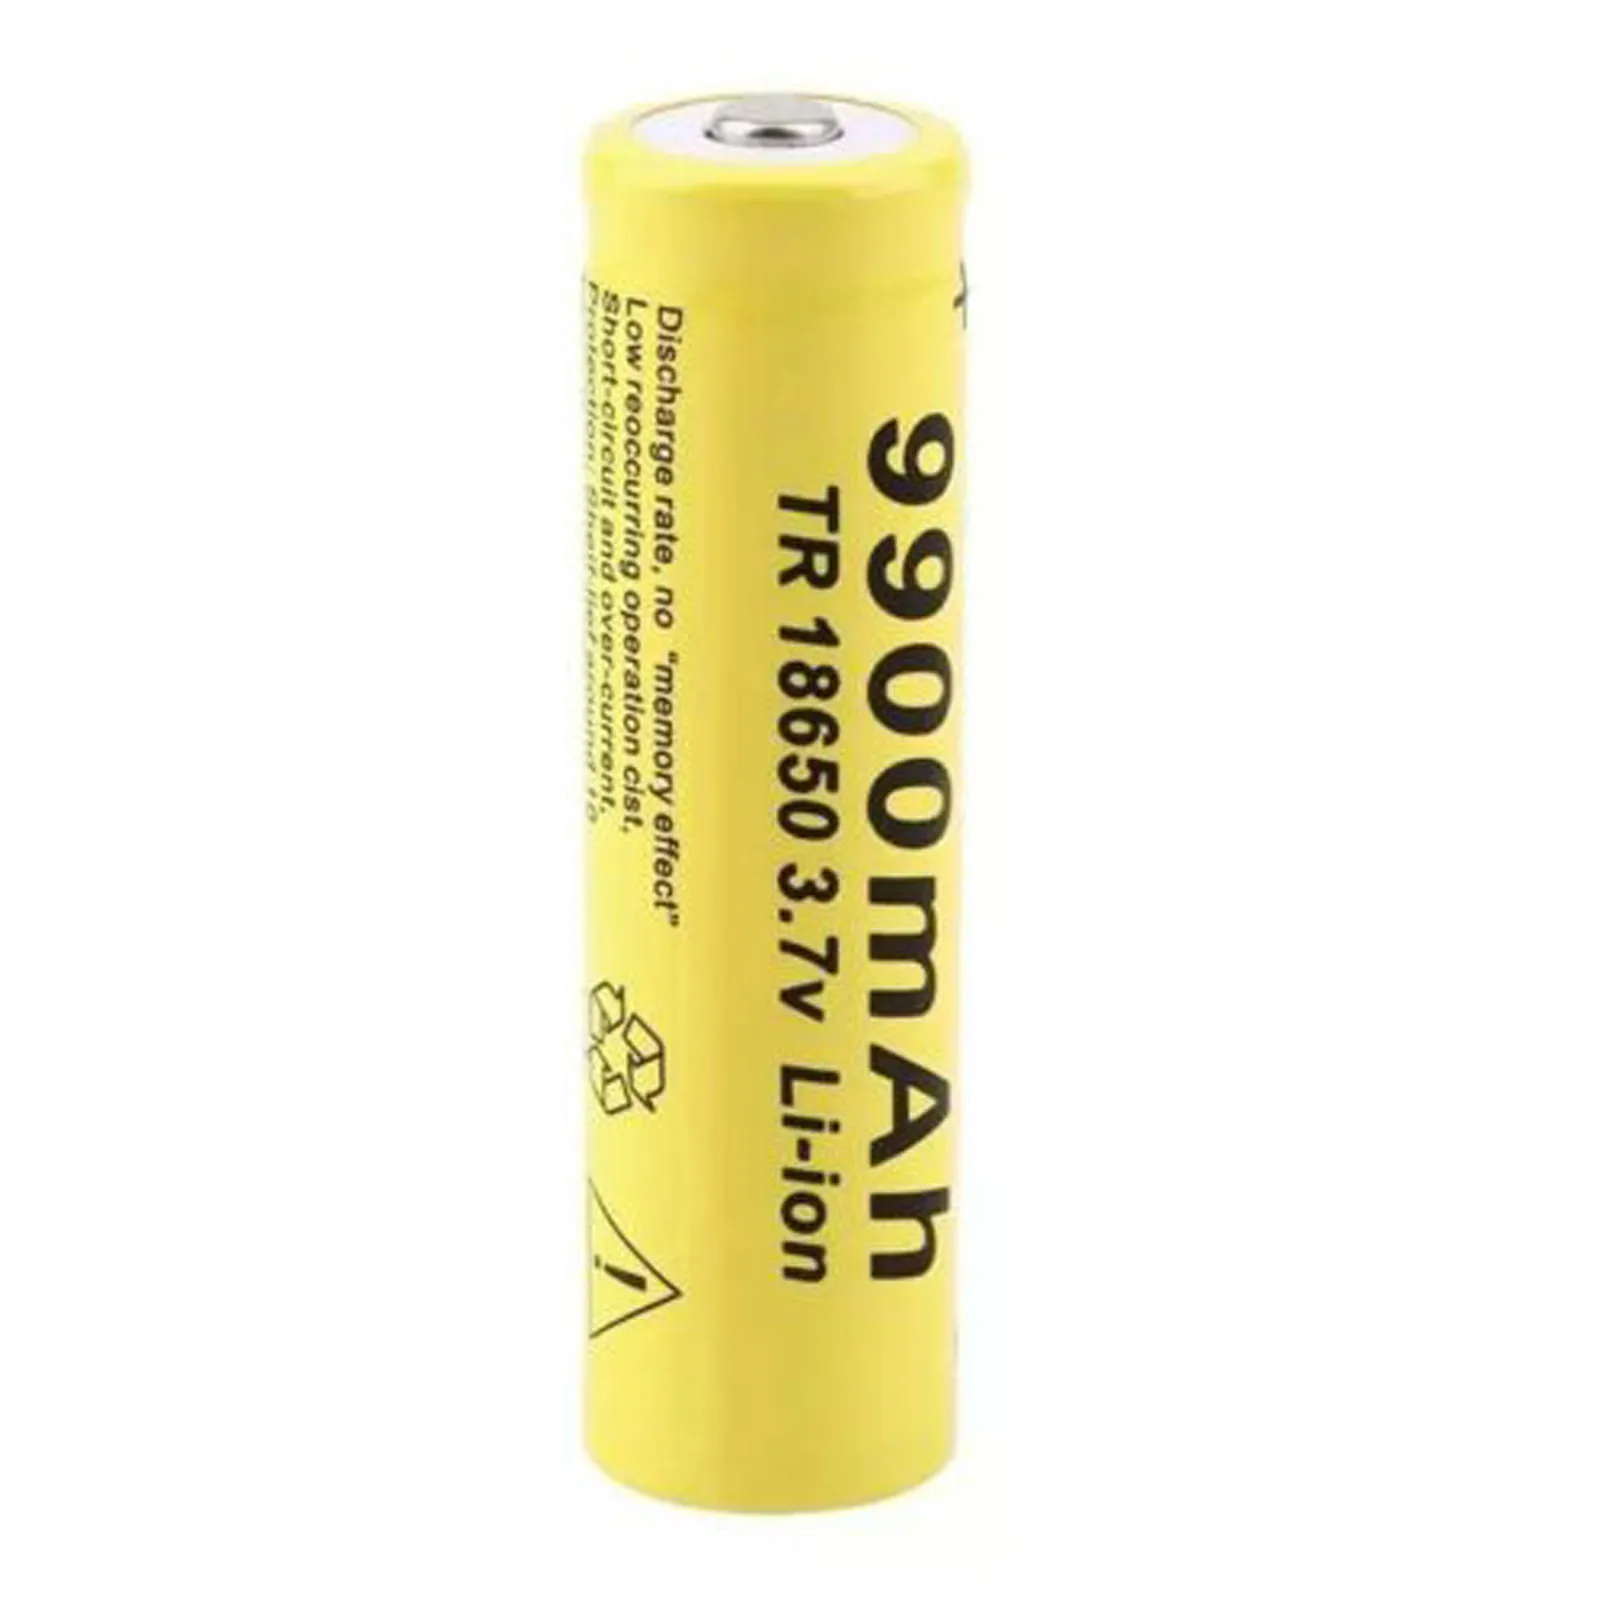 2x 18650 Rechargeable Batteries 9900mAh LONG LIFE HIGH DRAIN CAPACITY Heavy Duty 